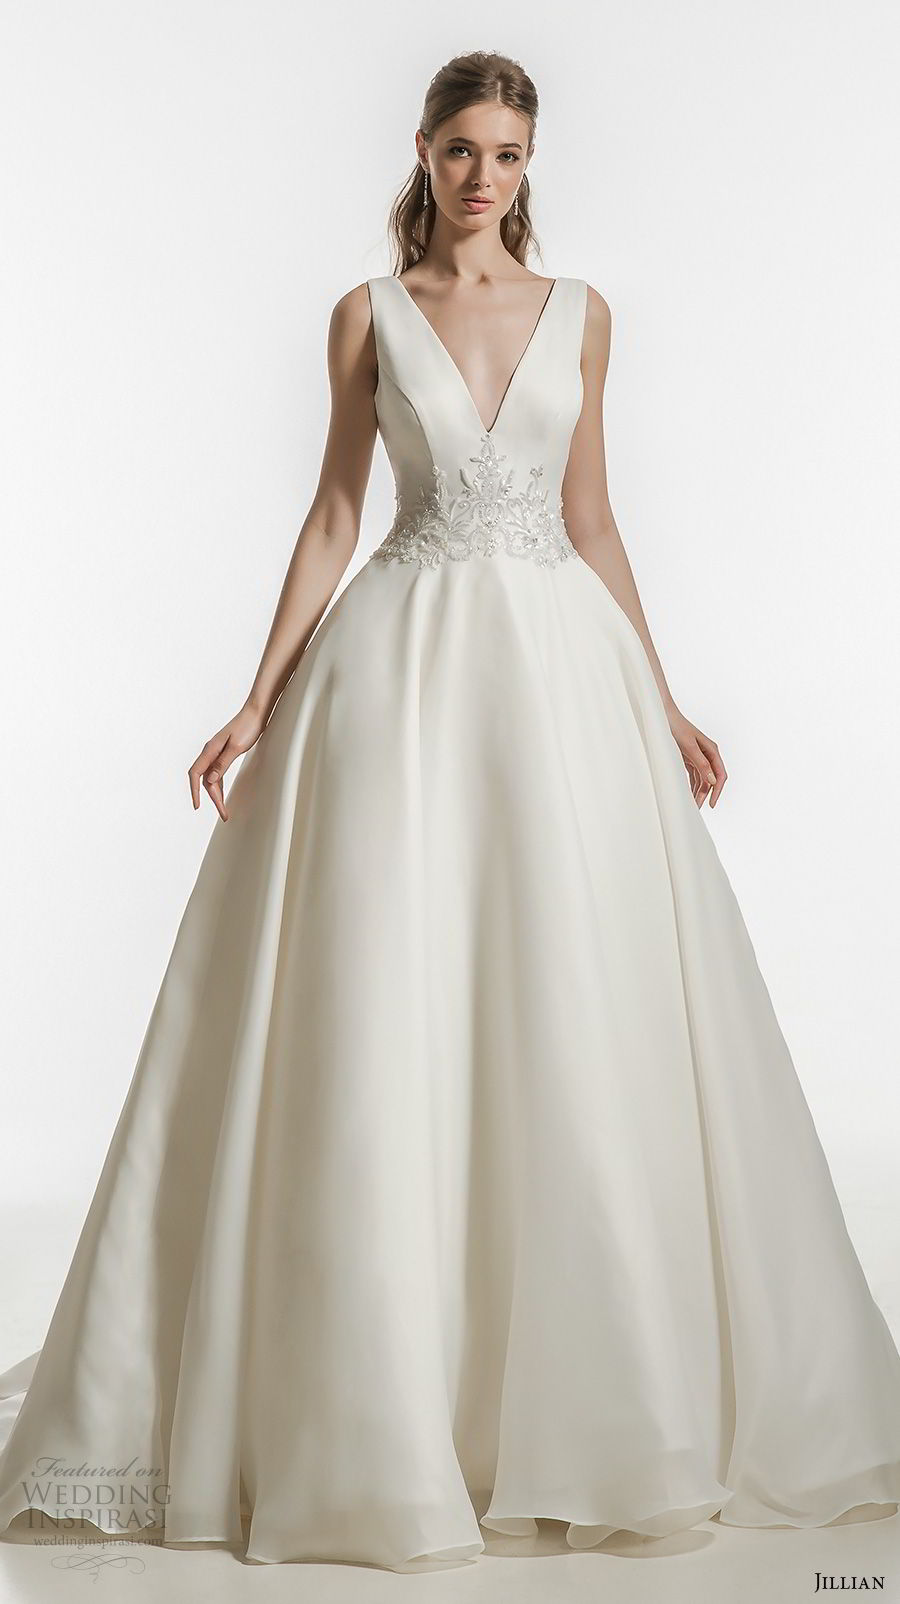 jillian 2018 bridal sleeveless v neck lightly embellished waist simple clean romantic classic ball gown wedding dress chapel train (23) mv